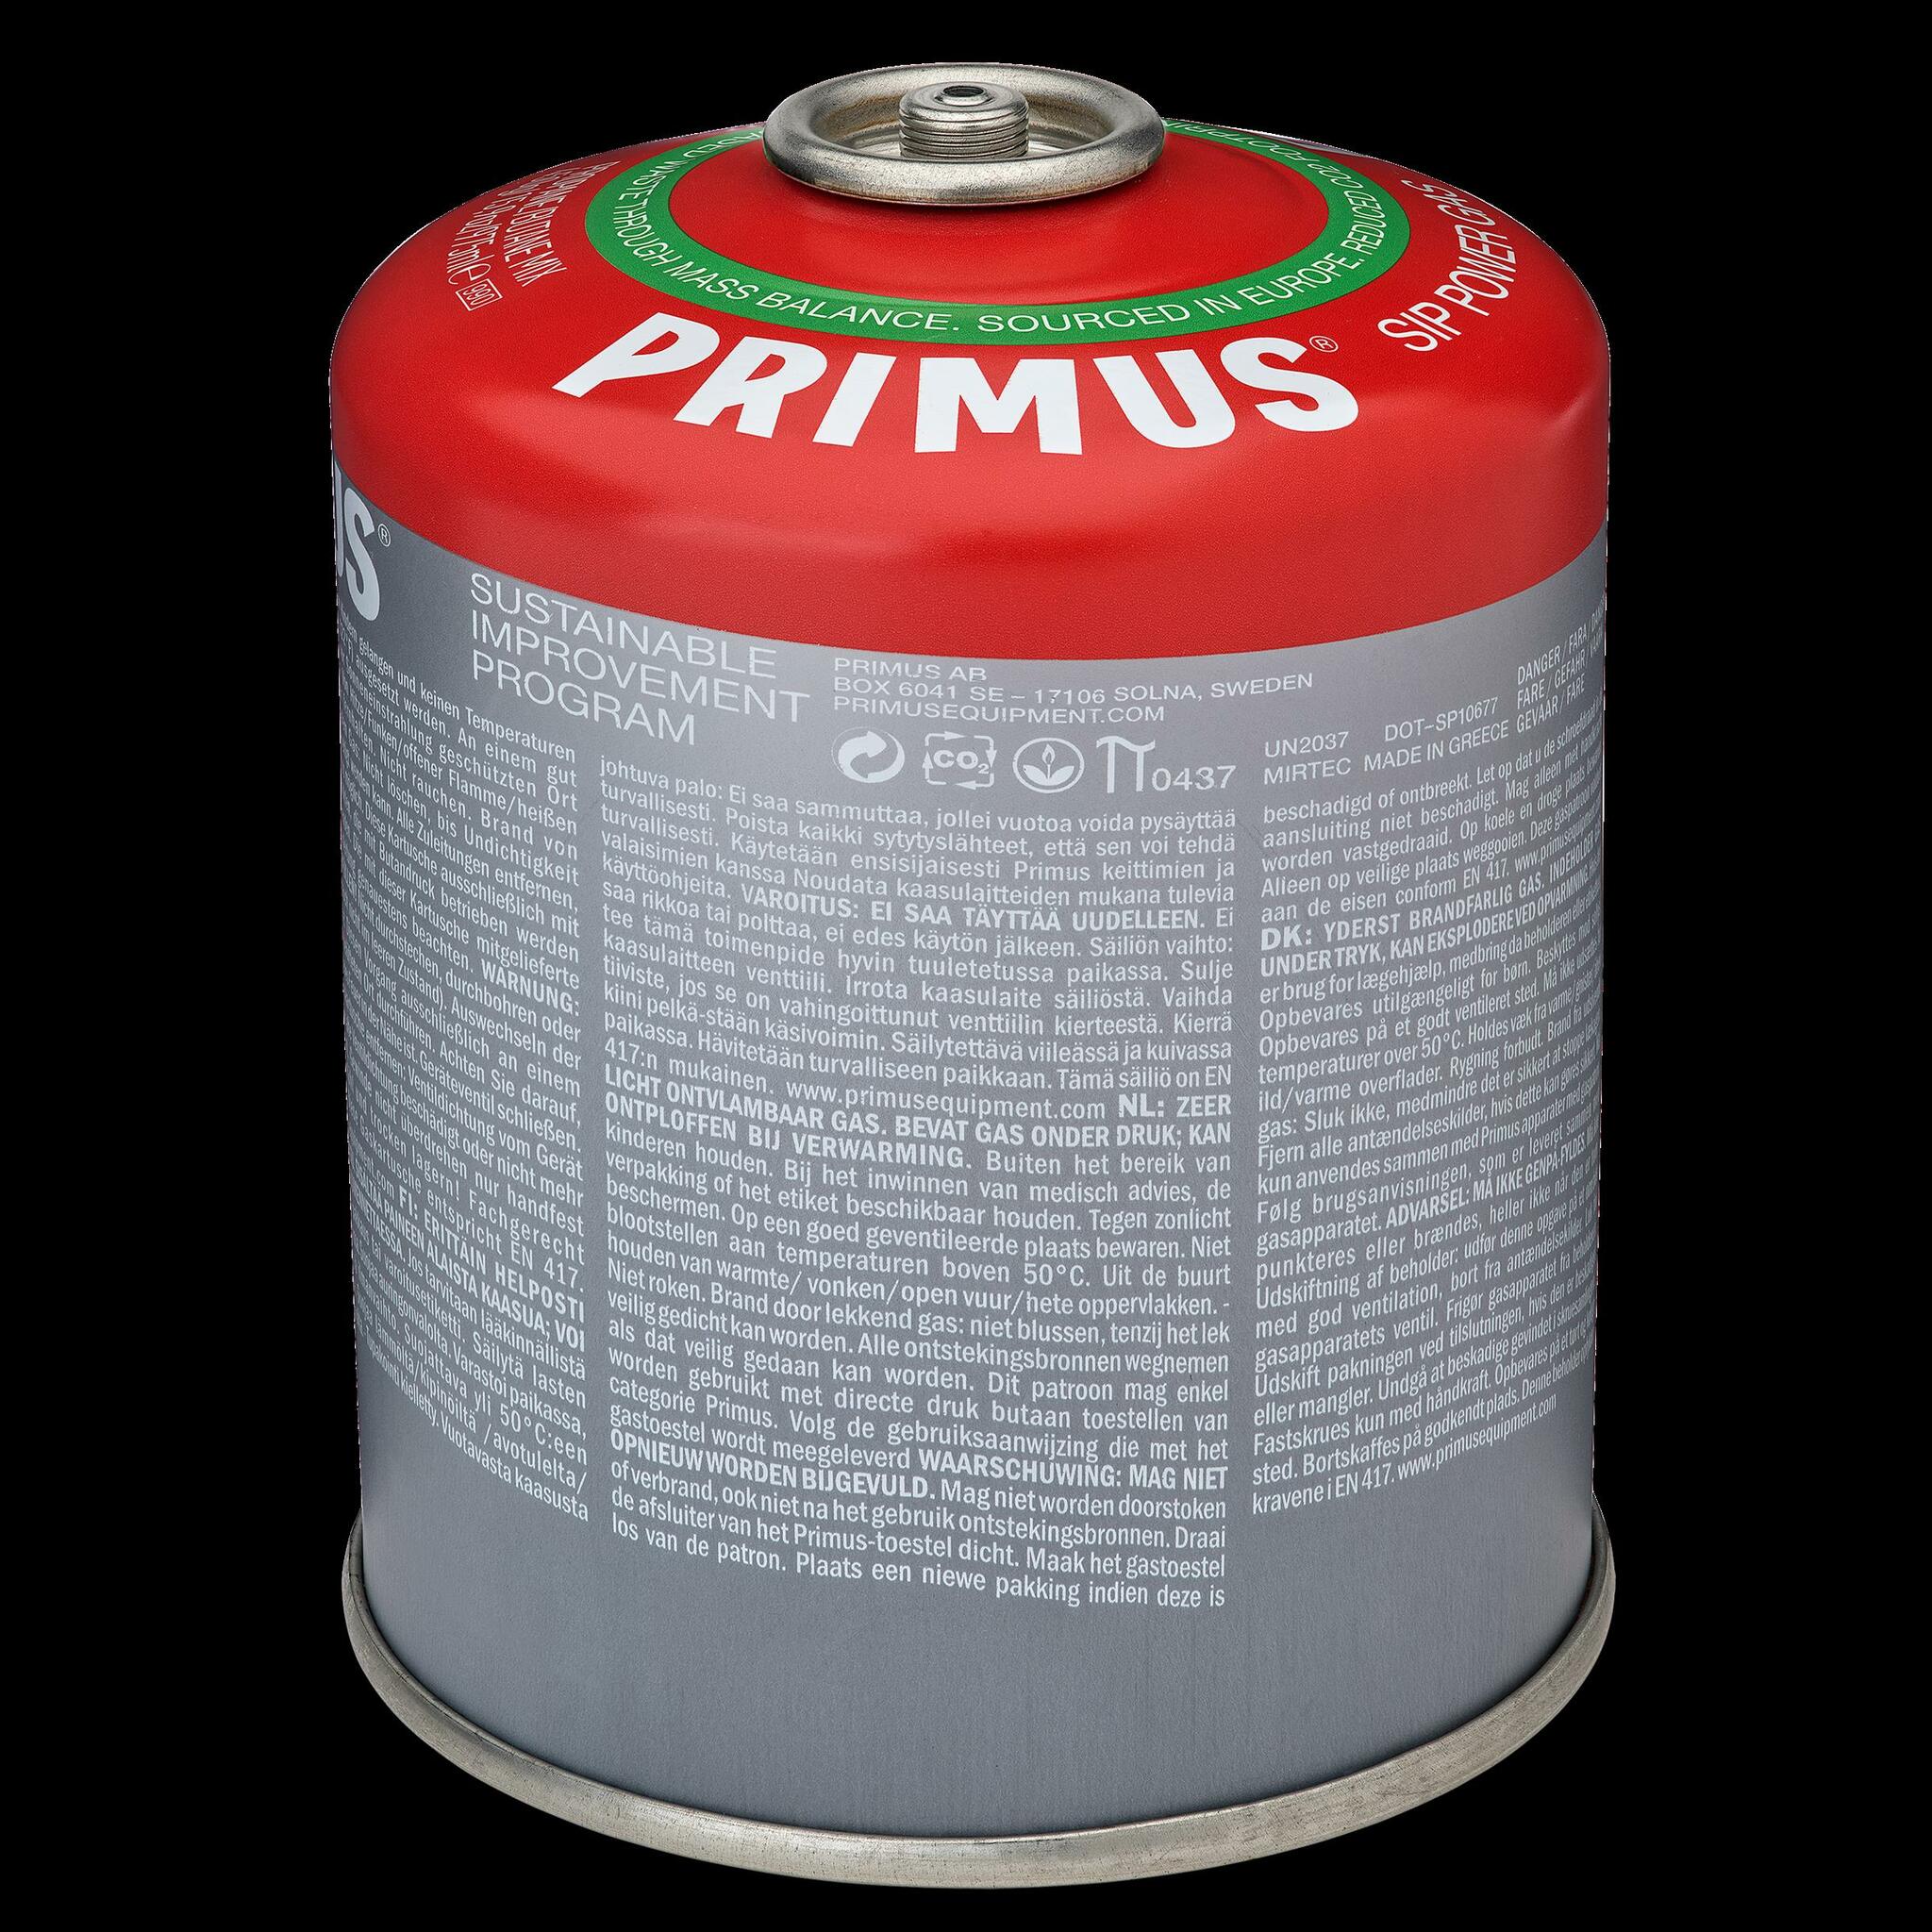 Primus Power Gas S.I.P 450G